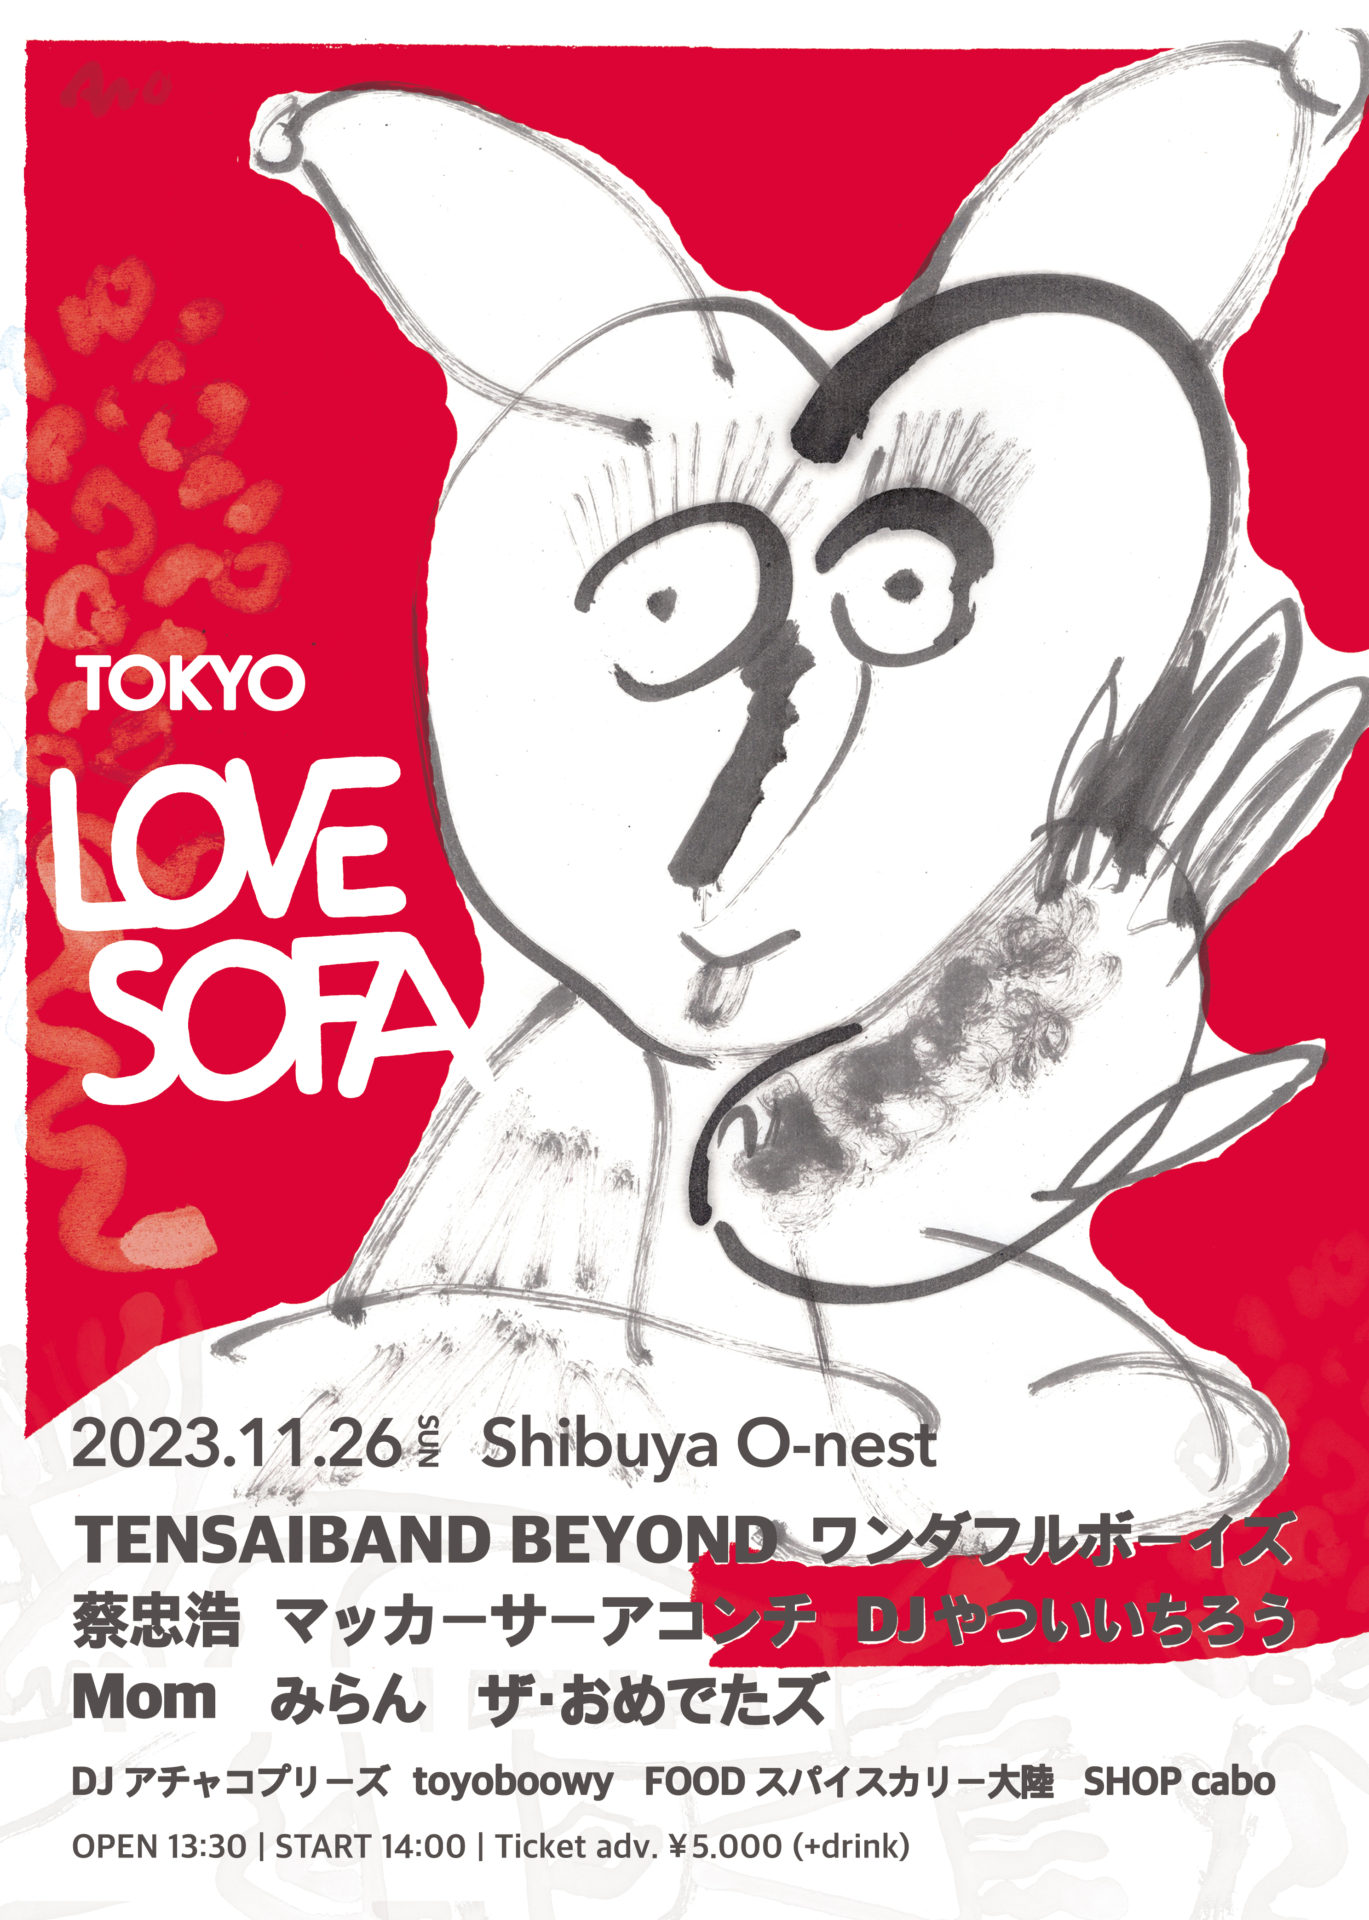 Love sofa Tokyo